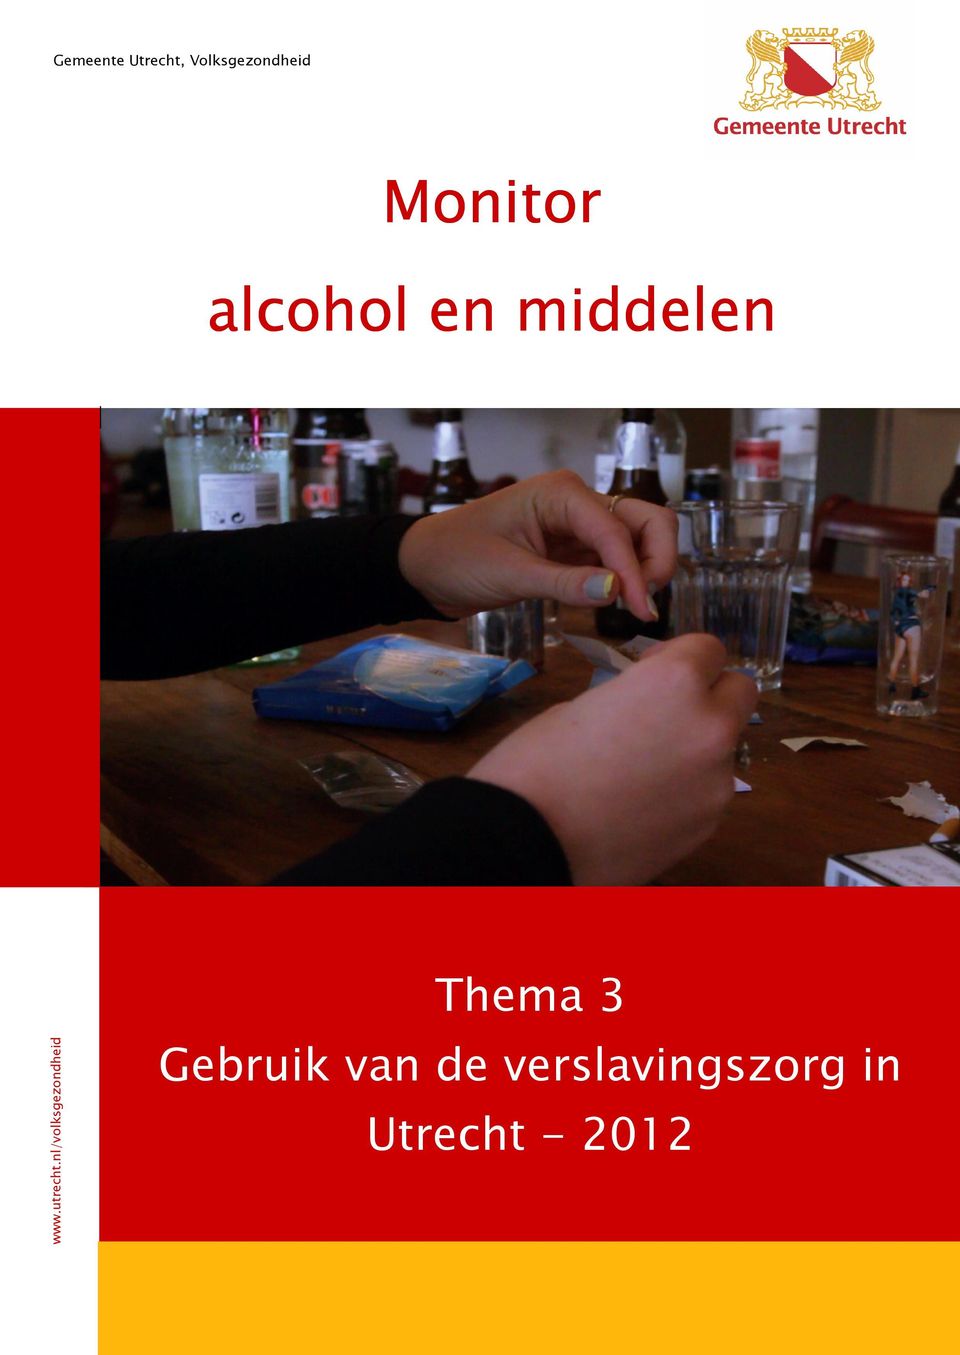 nl/gggd alcohol en middelen